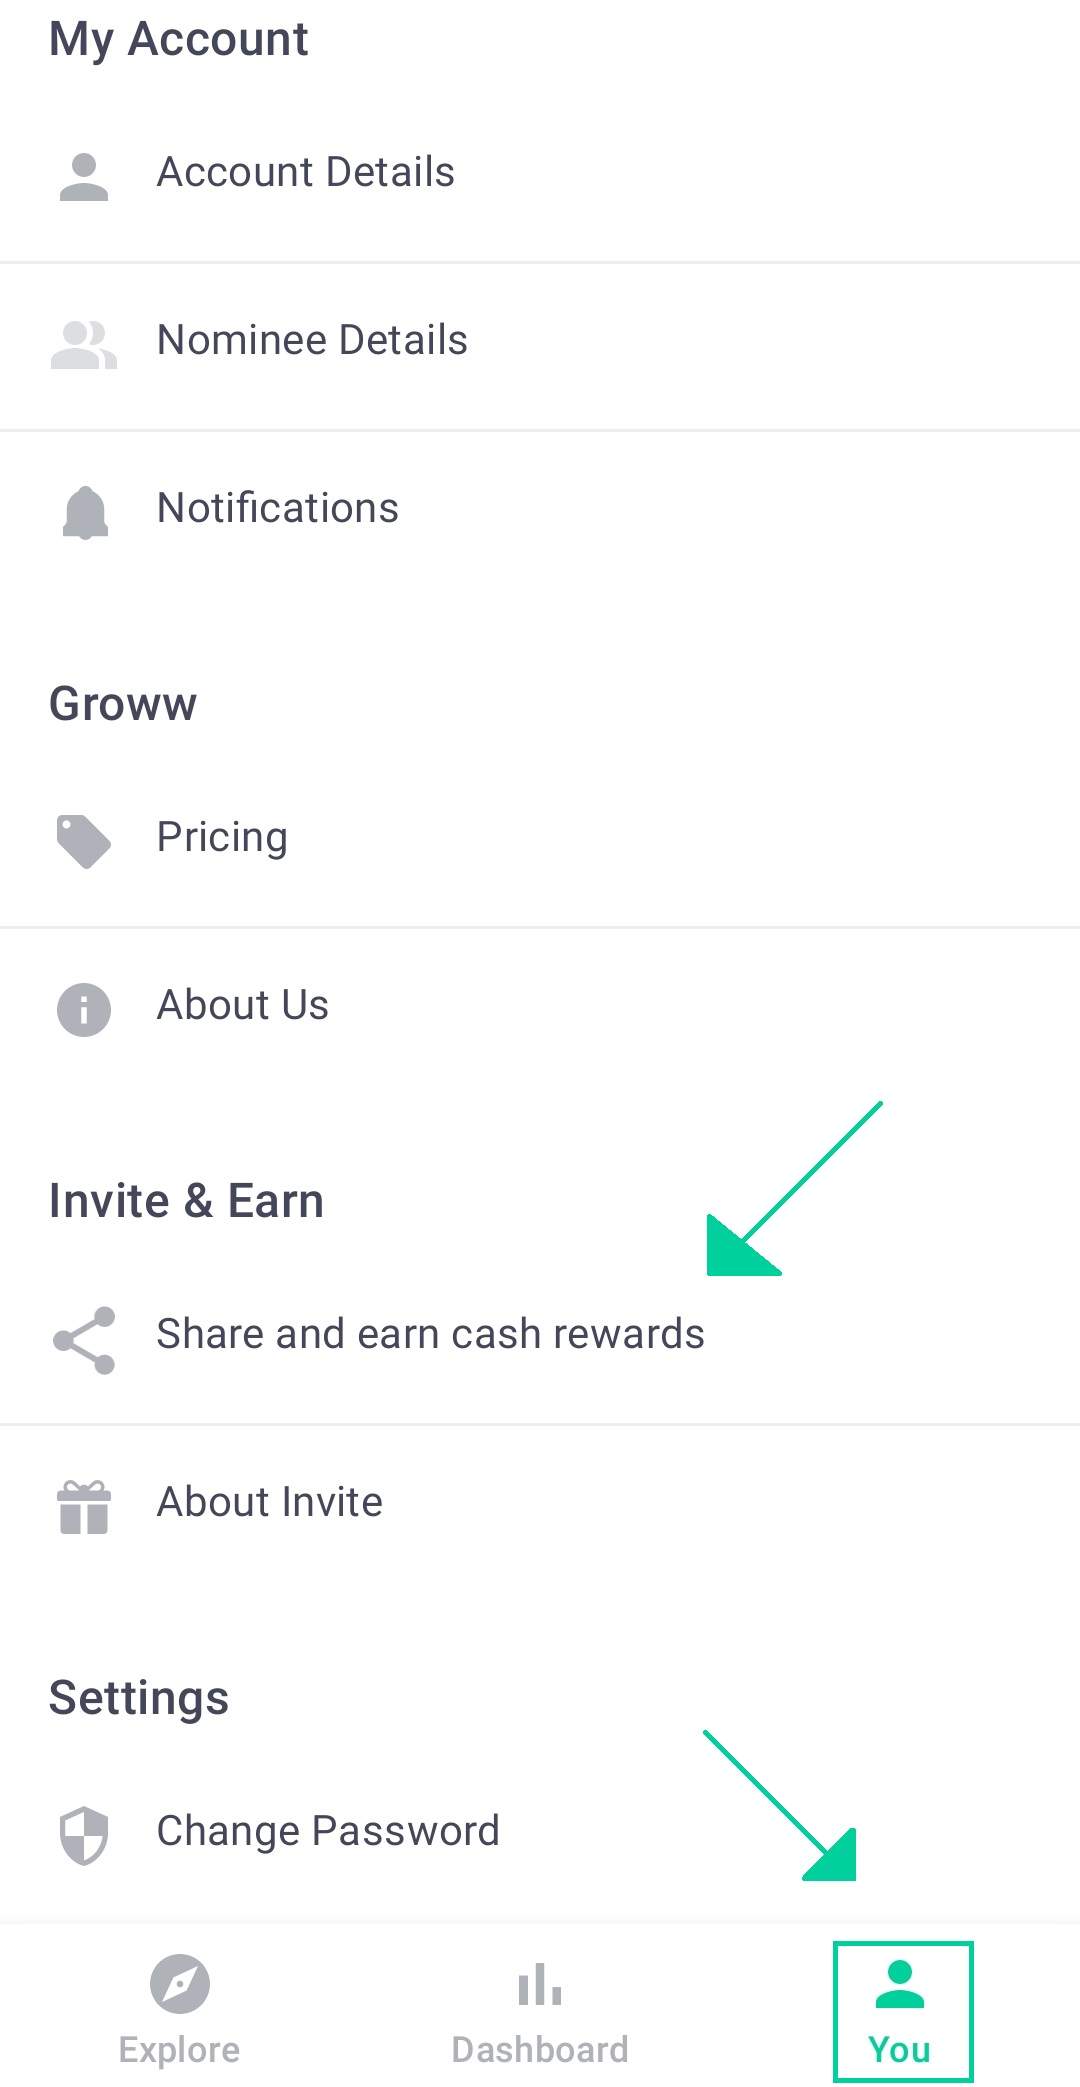 Groww App Referral Code 2021 - ₹101 Sign Up Bonus Per Refer